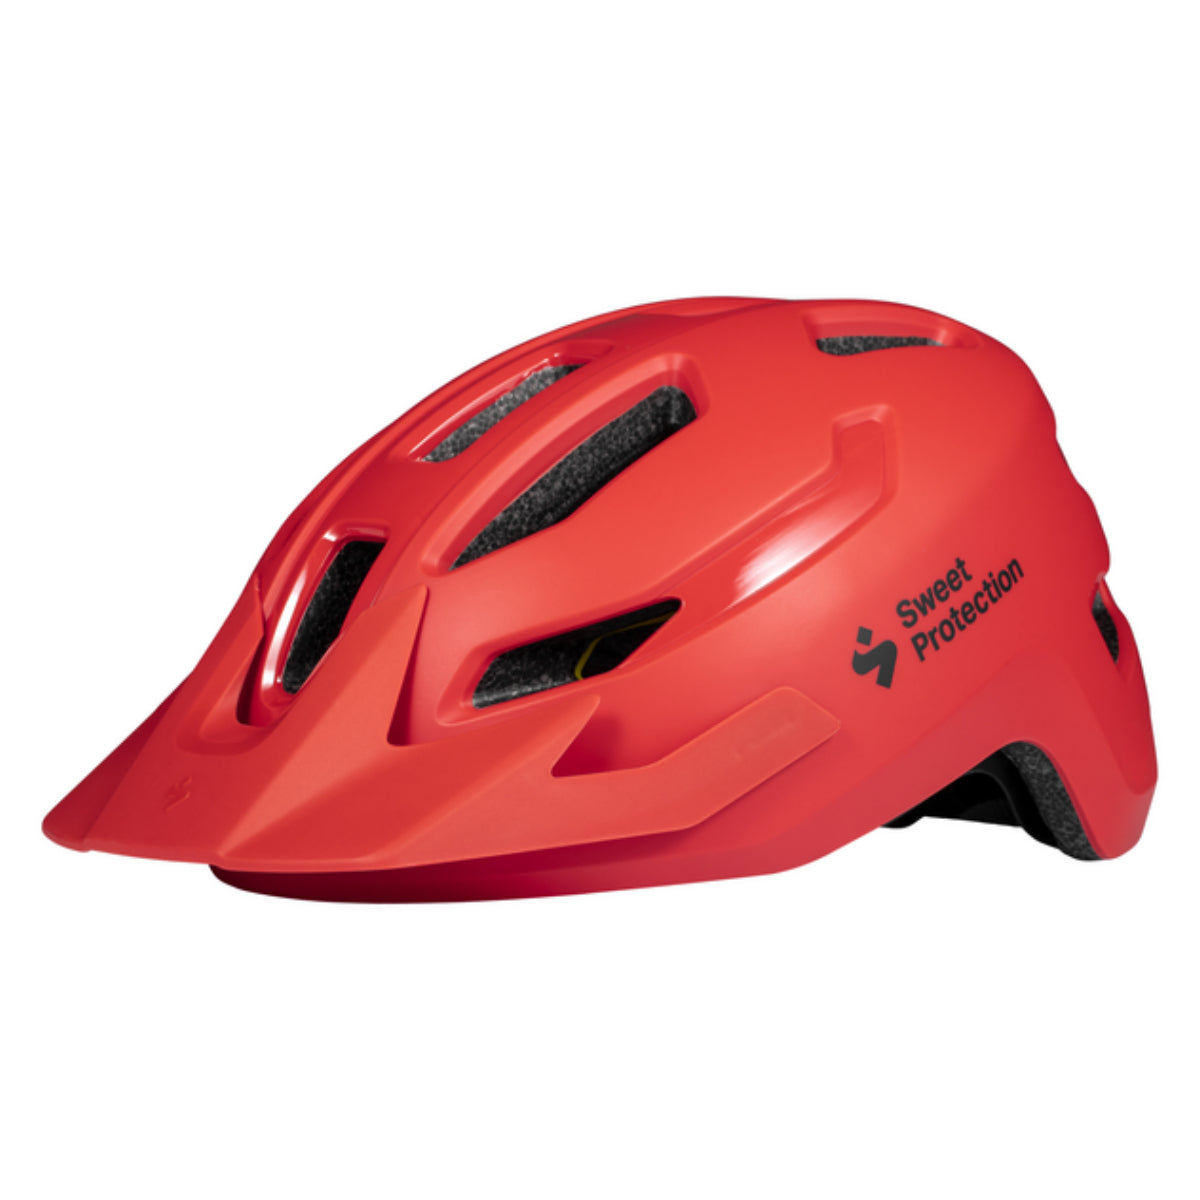 Sweet Protection - Ripper Helmet - Lava